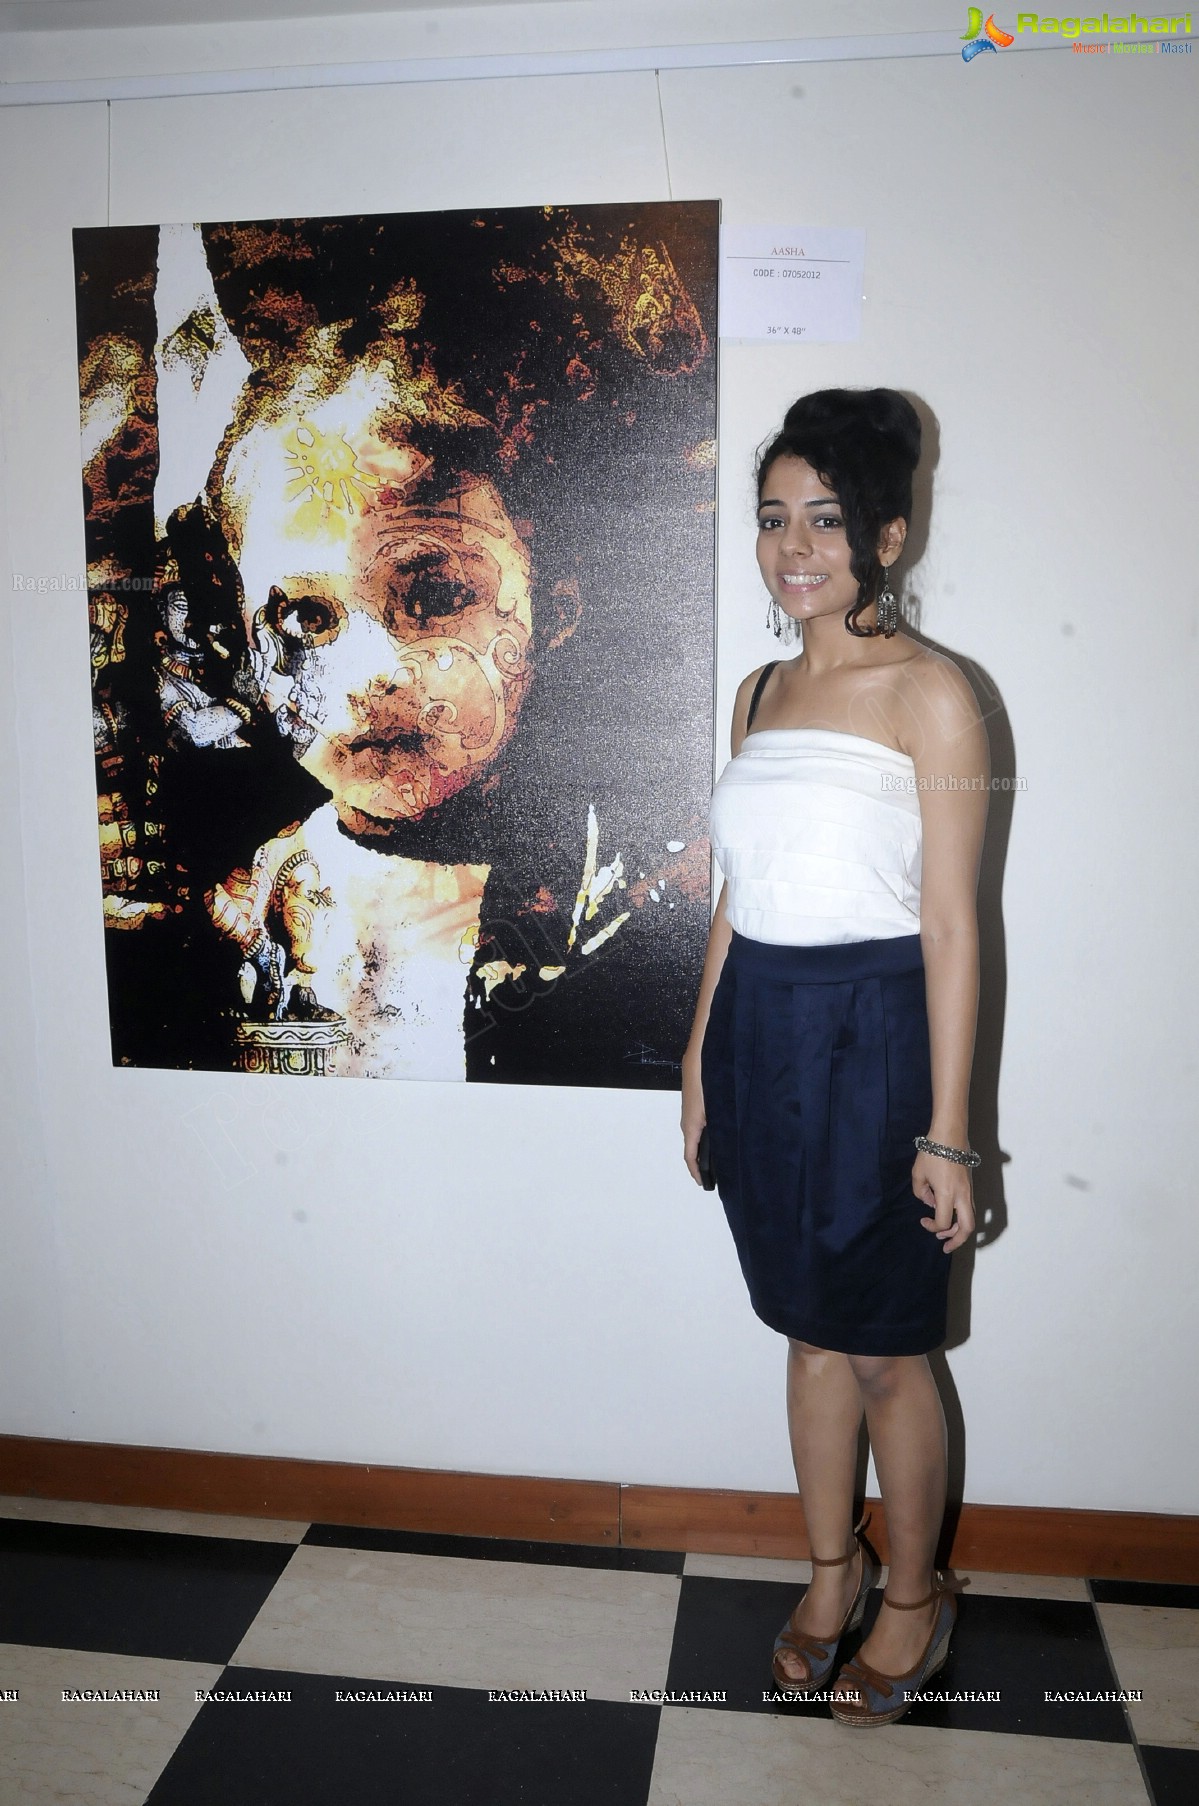 Metamorphorescence: An Art Exhibition by Pranati Khanna at Muse Art Gallery